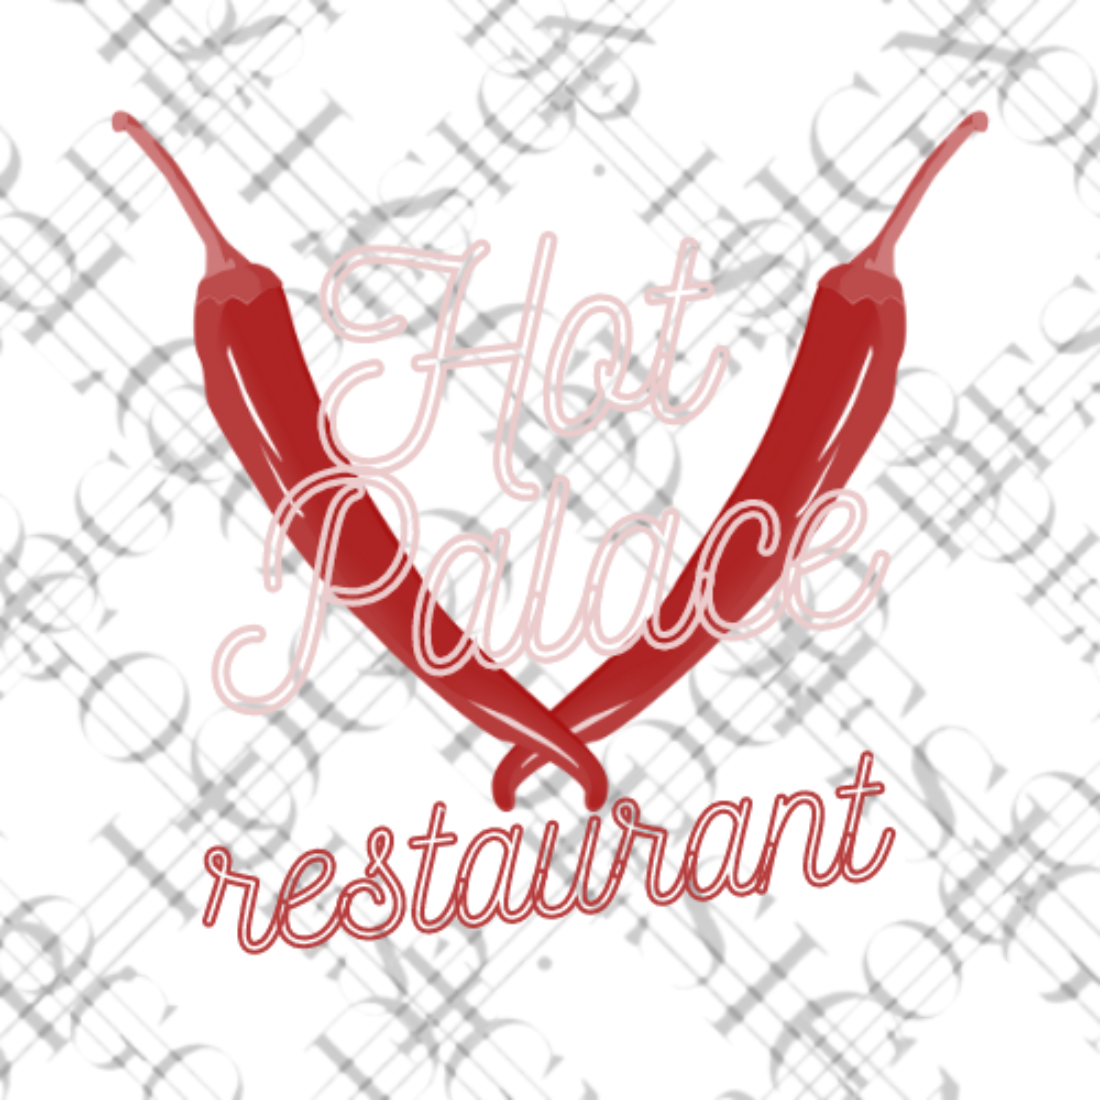 Restaurant Hot Palace Logo Design cover image.